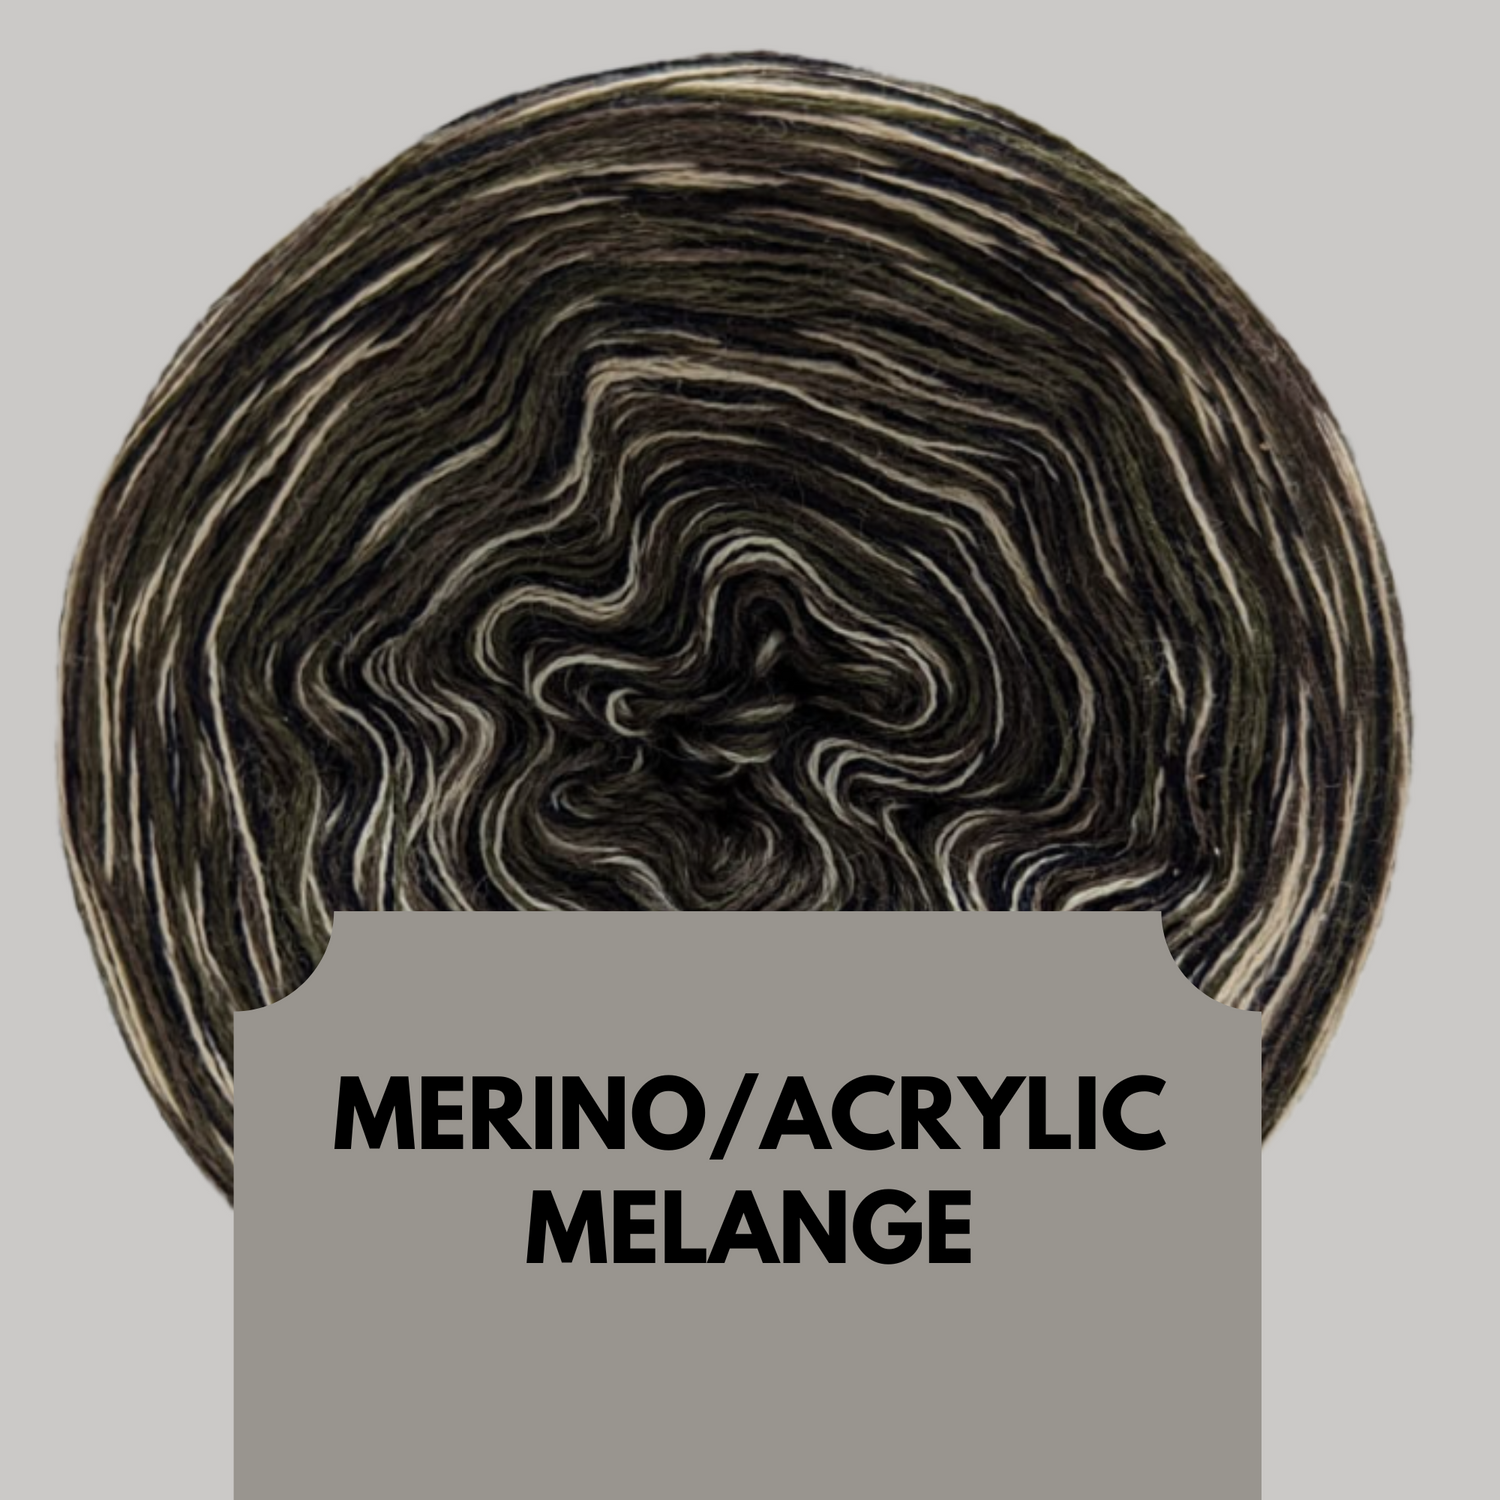 Merino/Acrylic Melange Yarn